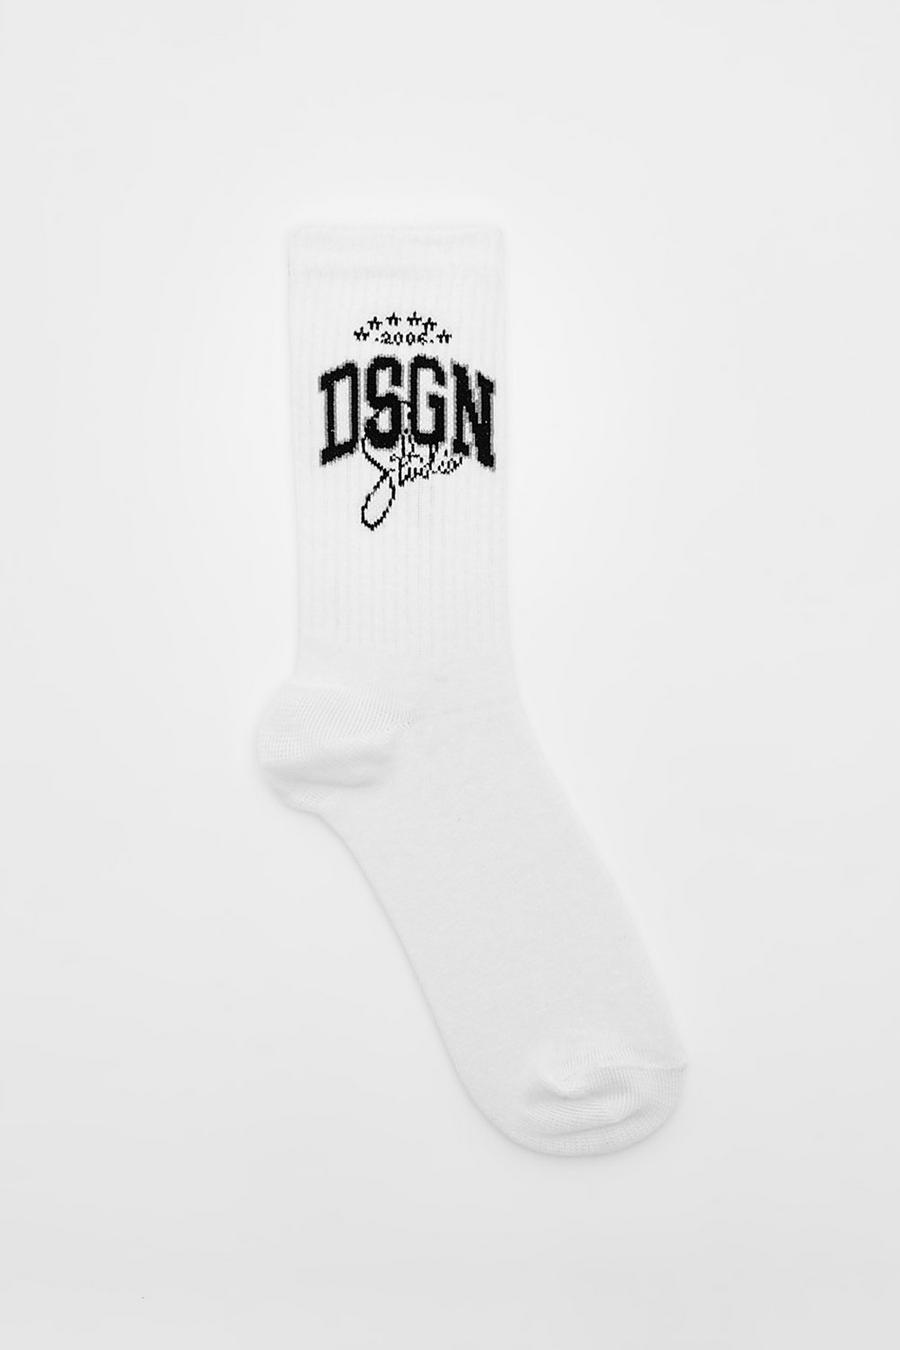 Calcetines deportivos Dsgn Studio, White blanco